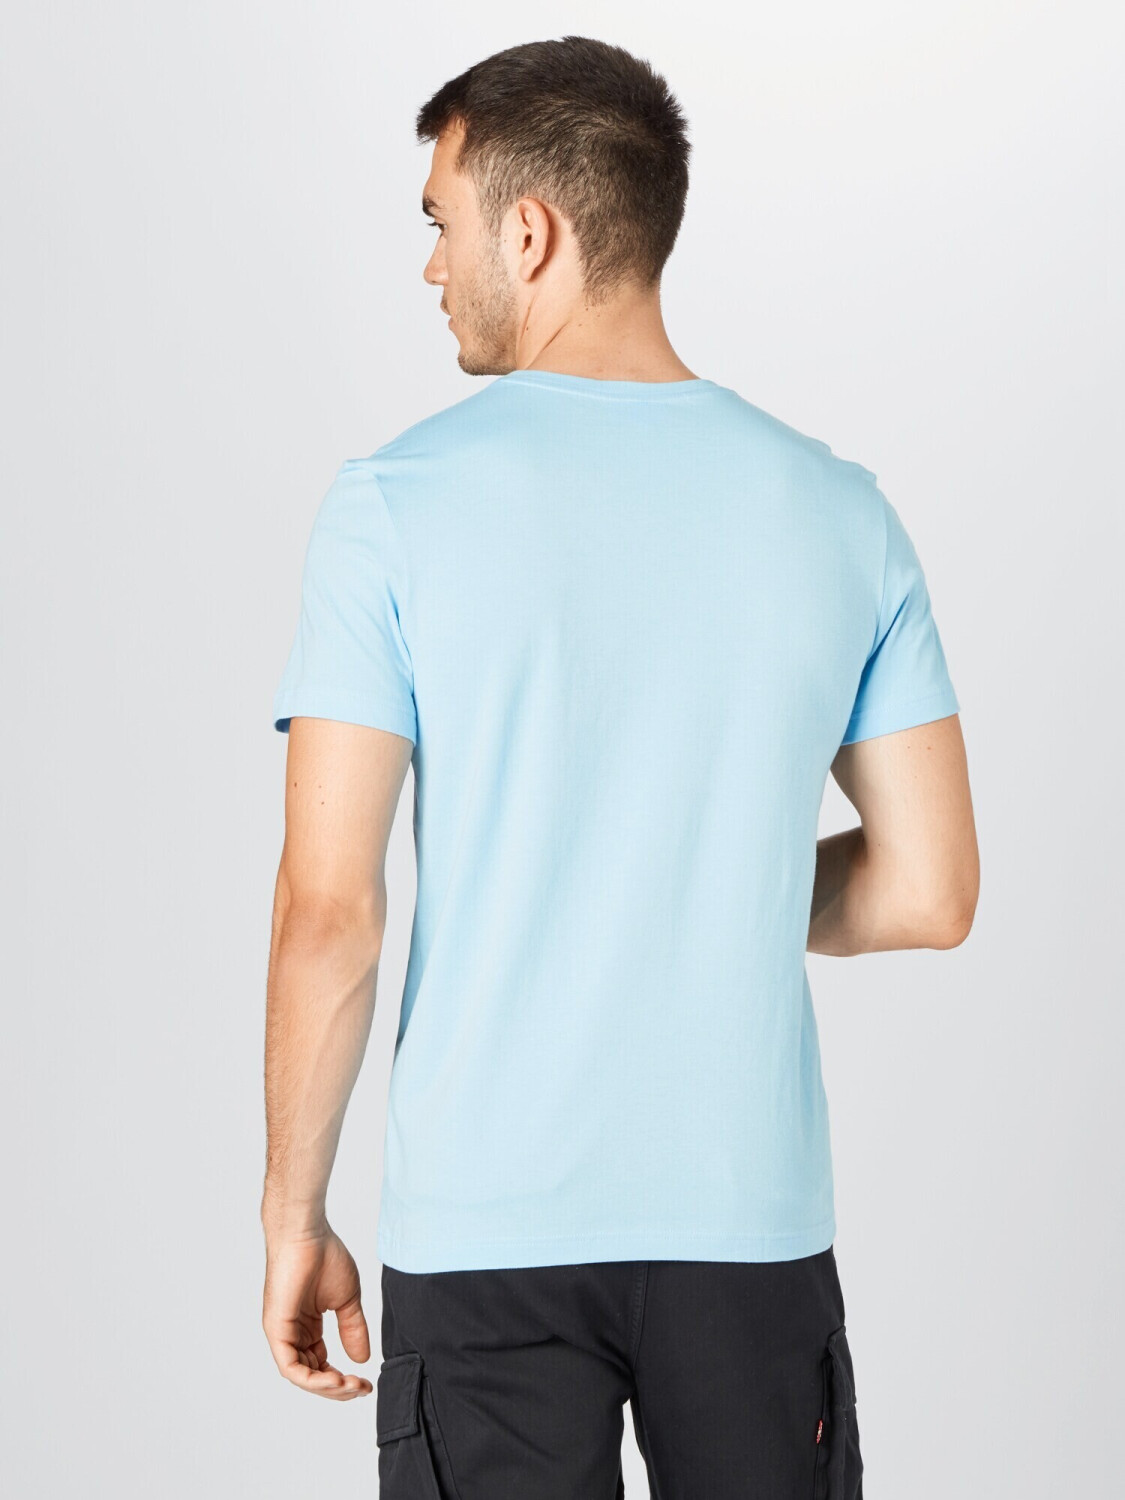 Lacoste Men's Crew Neck Jersey T-shirt (TH2038) panorama ab 35,99 € |  Preisvergleich bei